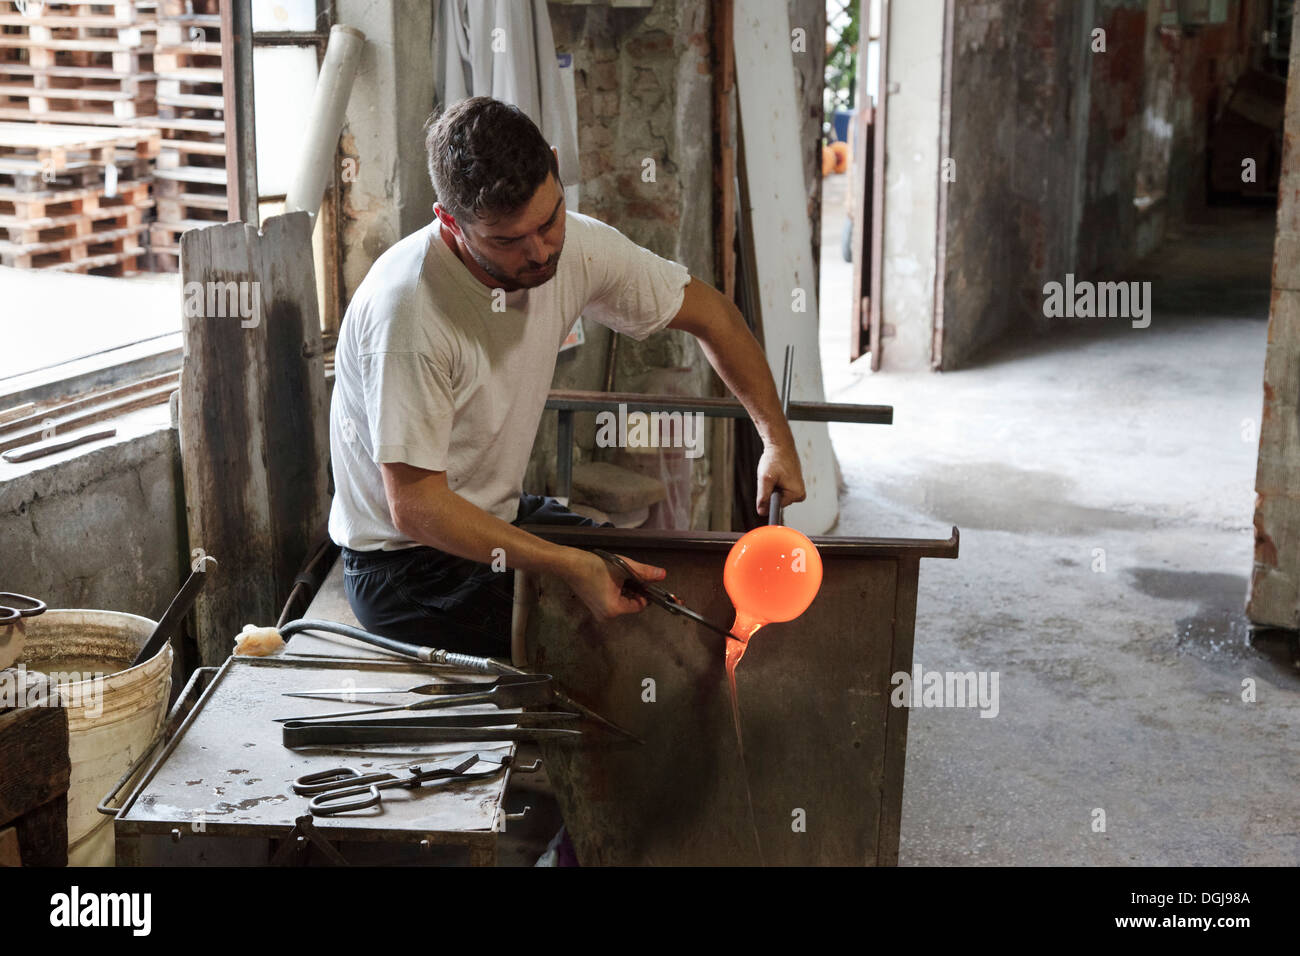 A man making Murano glass. Stock Photo